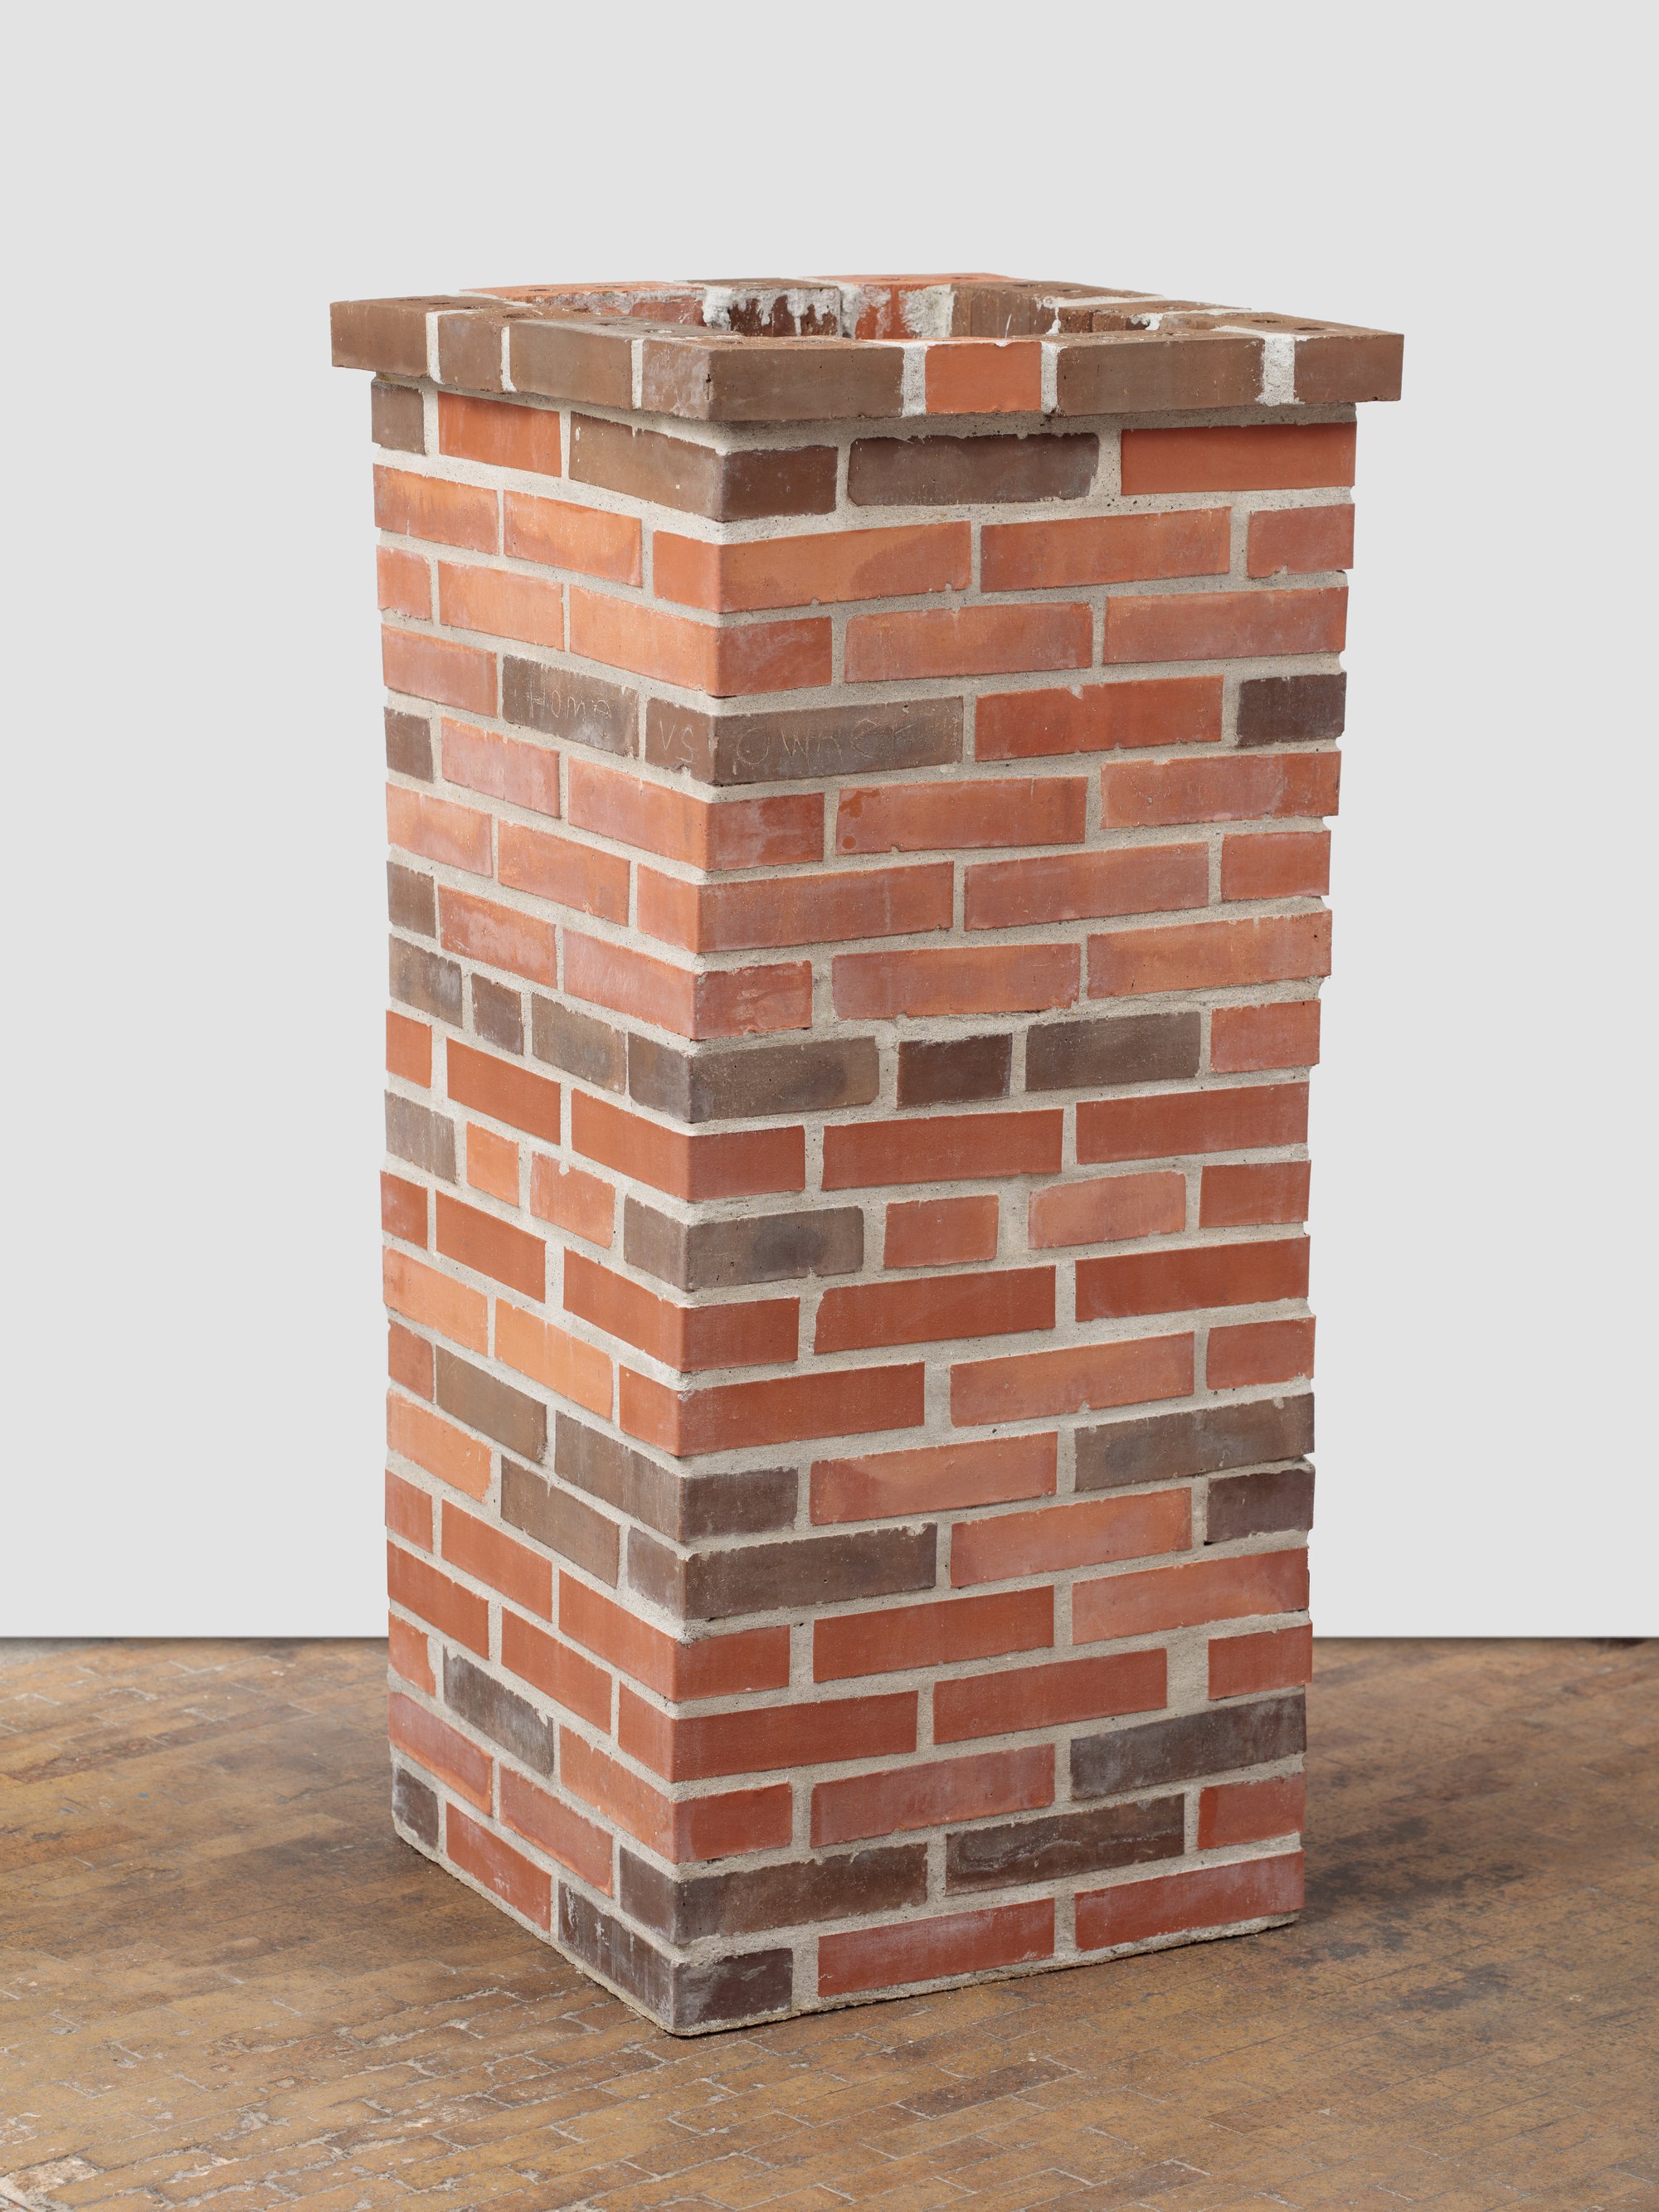 Sidsel Meineche Hansen, home vs owner 2, bricks and mortar, 60 x 60 x 120 cm, 2020